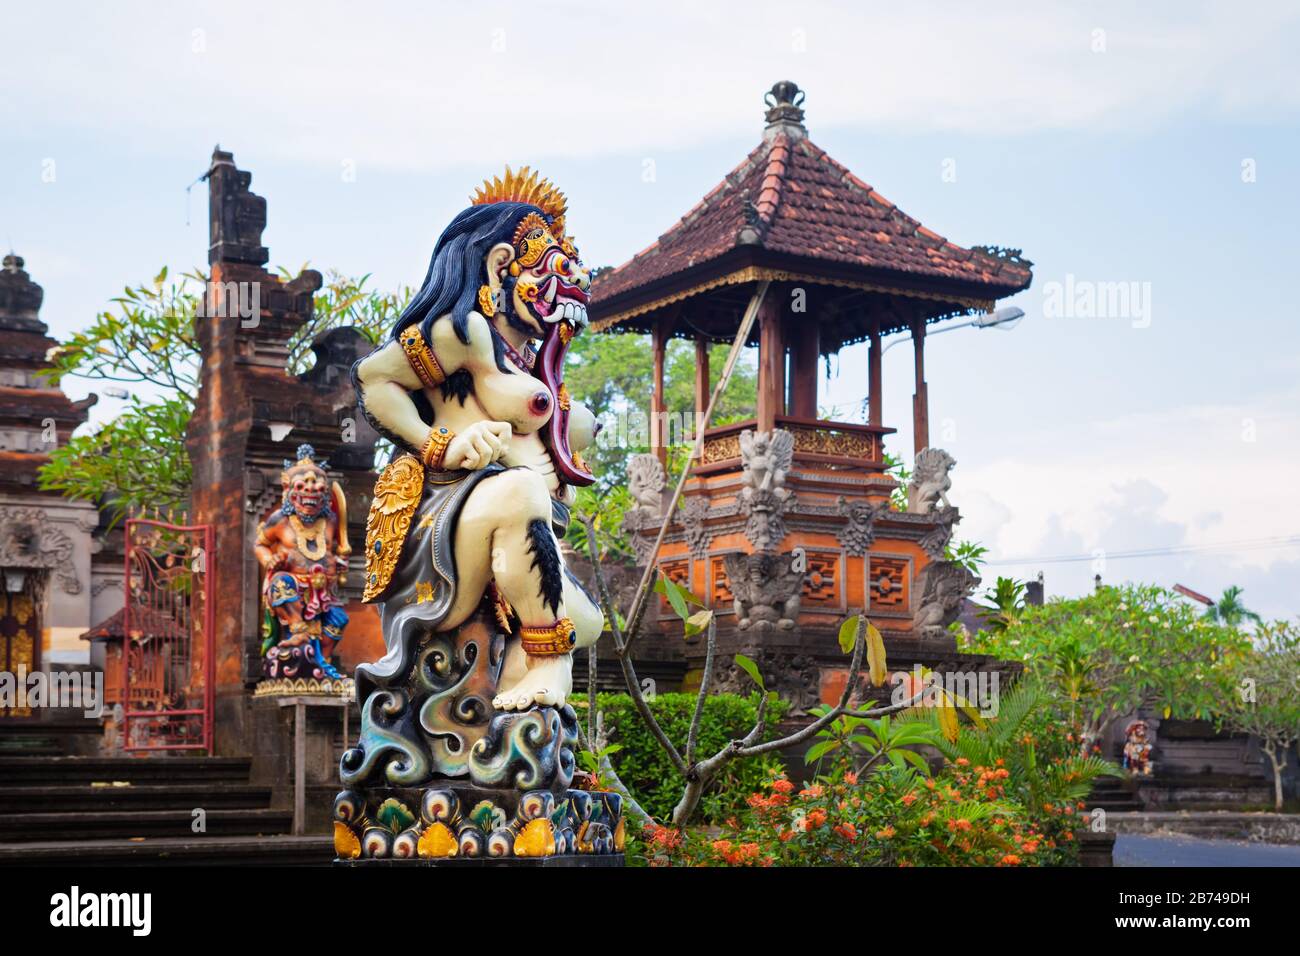 Details of traditional balinese hindu temple. Rangda - traditional spirit of Bali island at temple before Nyepi holiday and silence day. Stock Photo